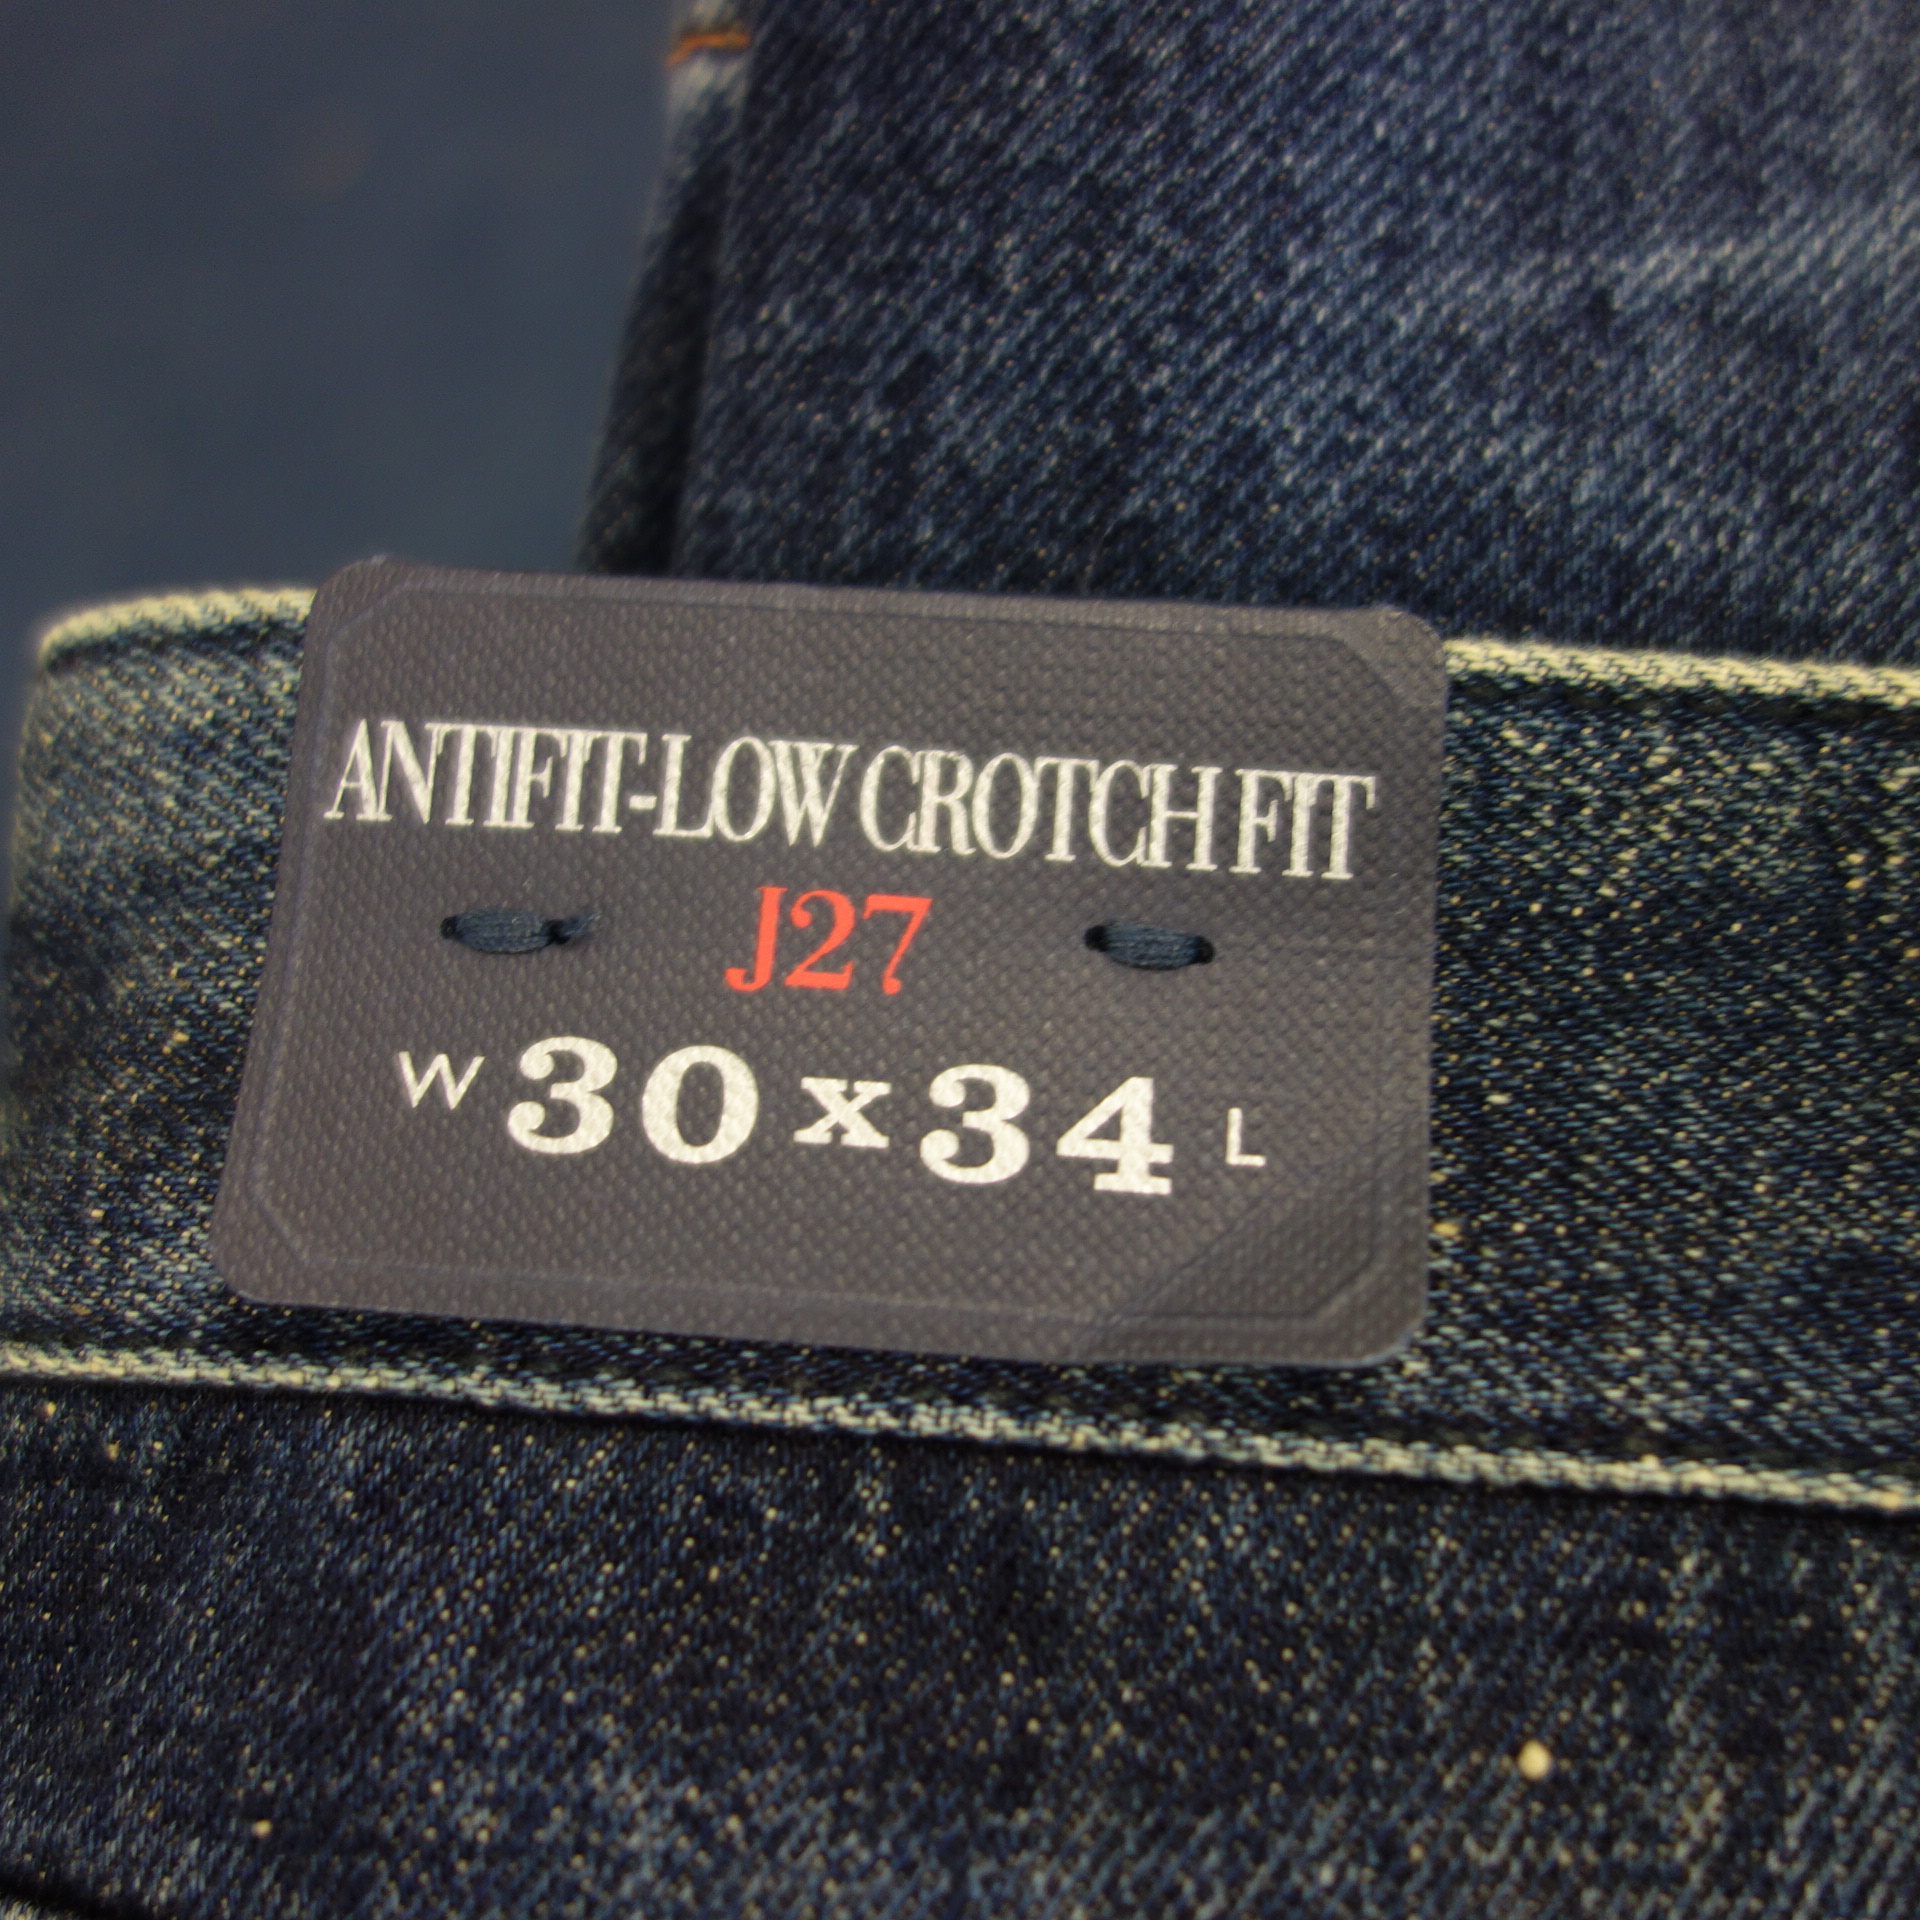 ARMANI JEANS Herren Jeans Hose Jeanshose J27 Blau Antifit Low Waist Tight Leg Button